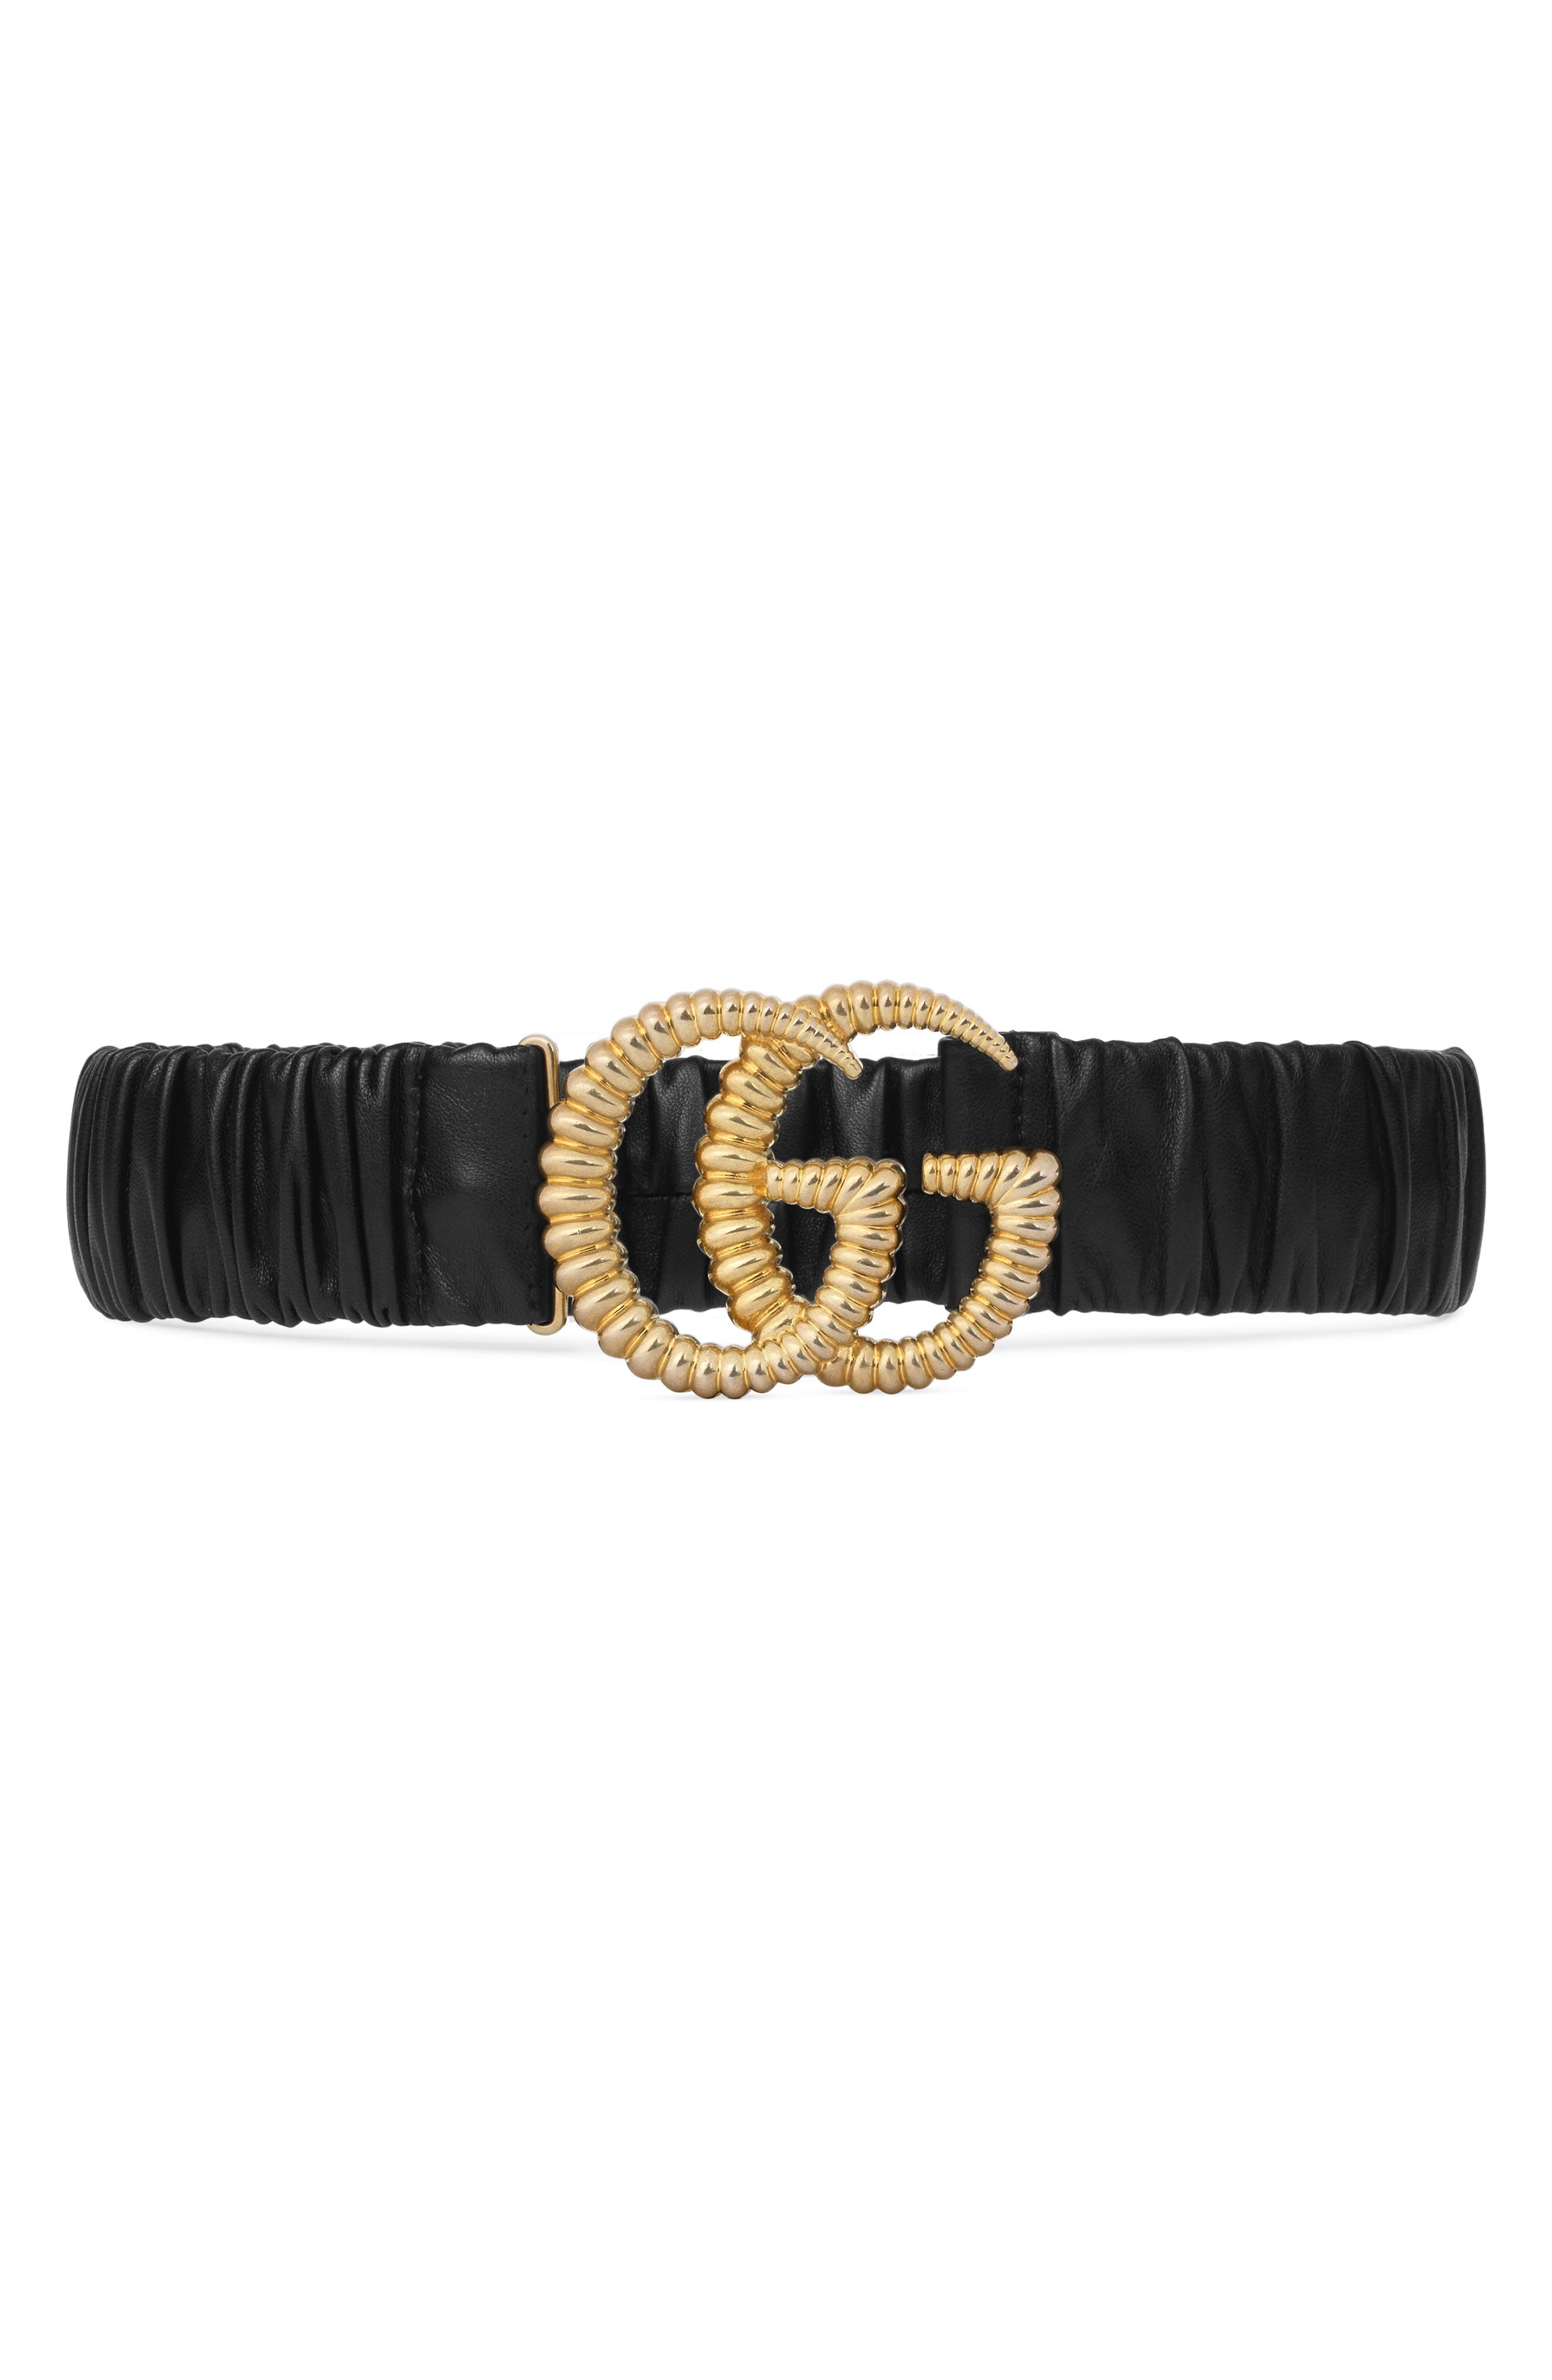 gucci inspired belt